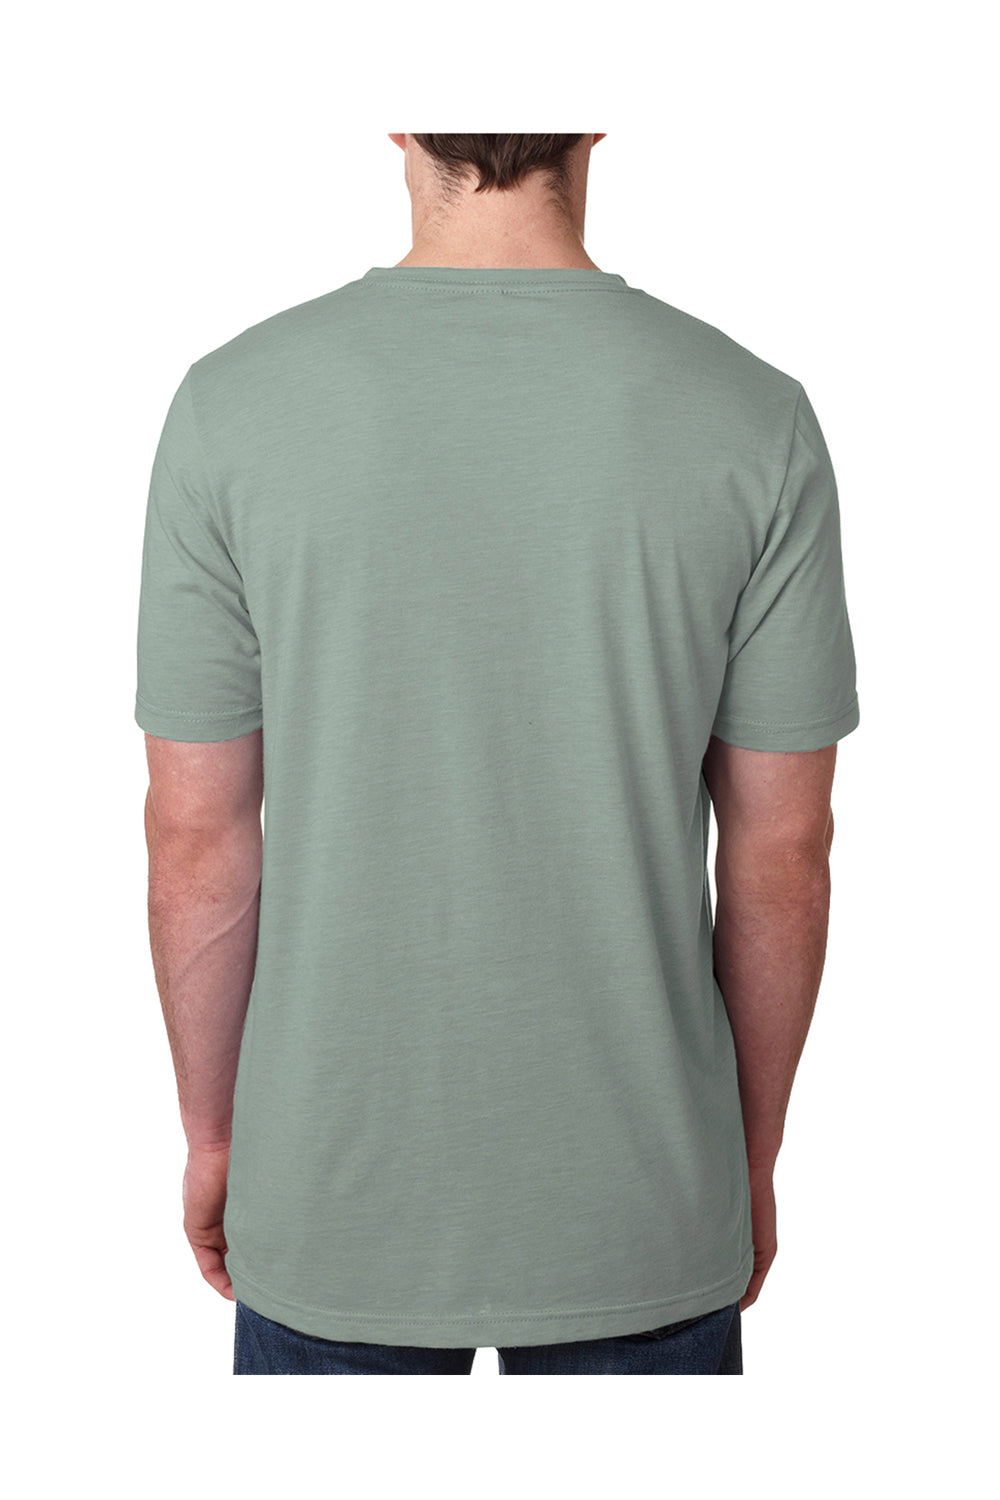 Next Level 6200 Mens Jersey Short Sleeve Crewneck T-Shirt Stonewashed Green Back